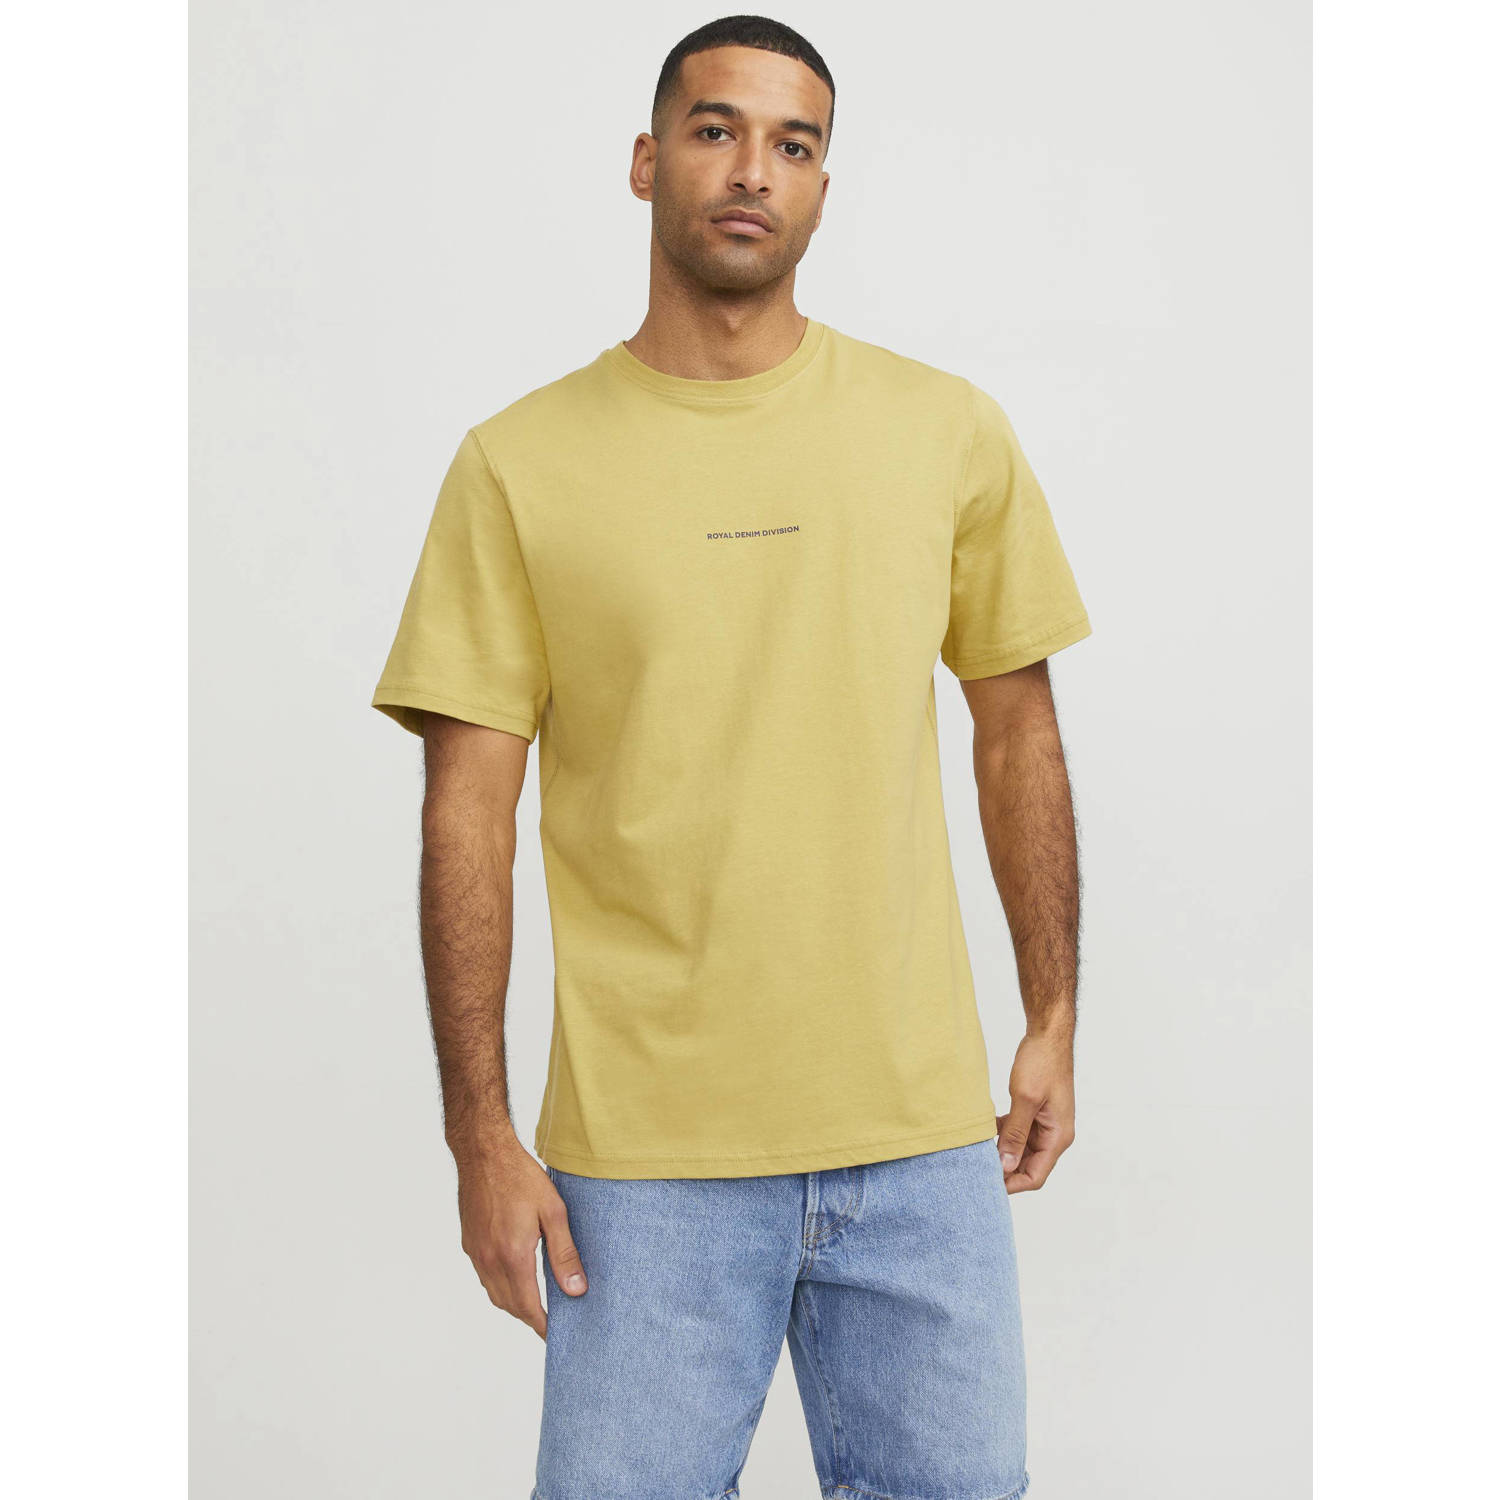 R.D.D. ROYAL DENIM DIVISION oversized T-shirt met printopdruk geel